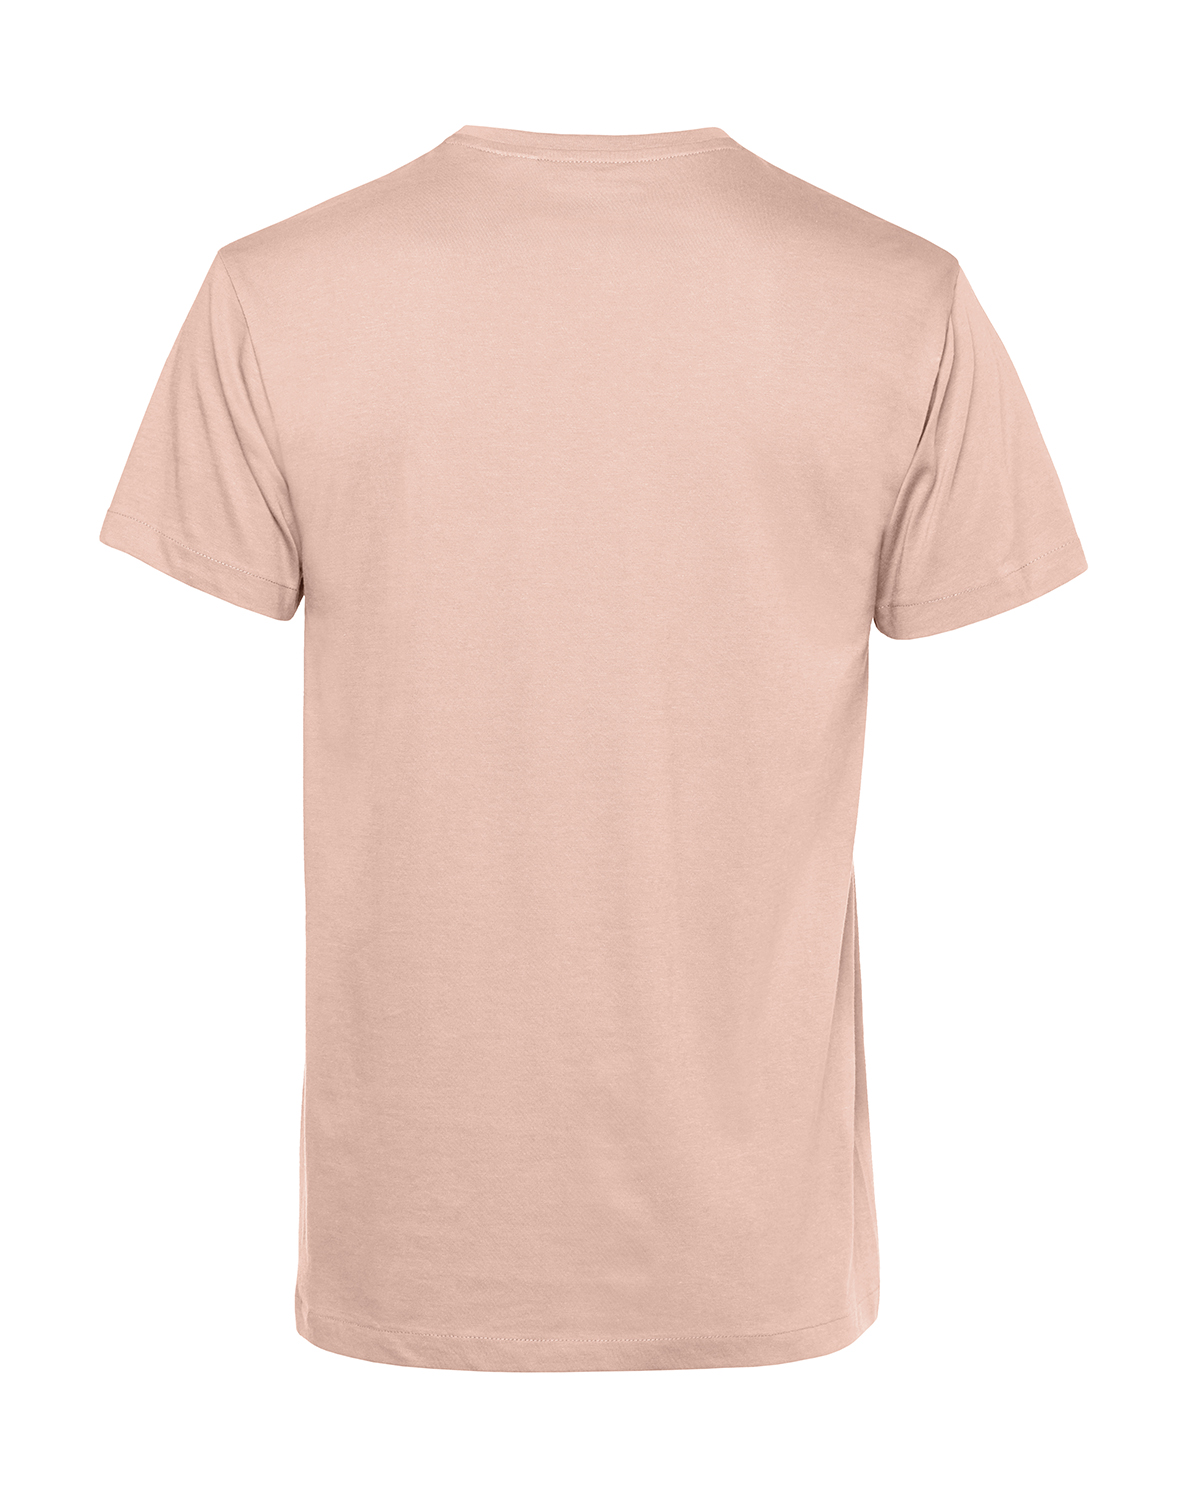 Unisex tričko Organic inspire Velikost: M, Barva: Růžová